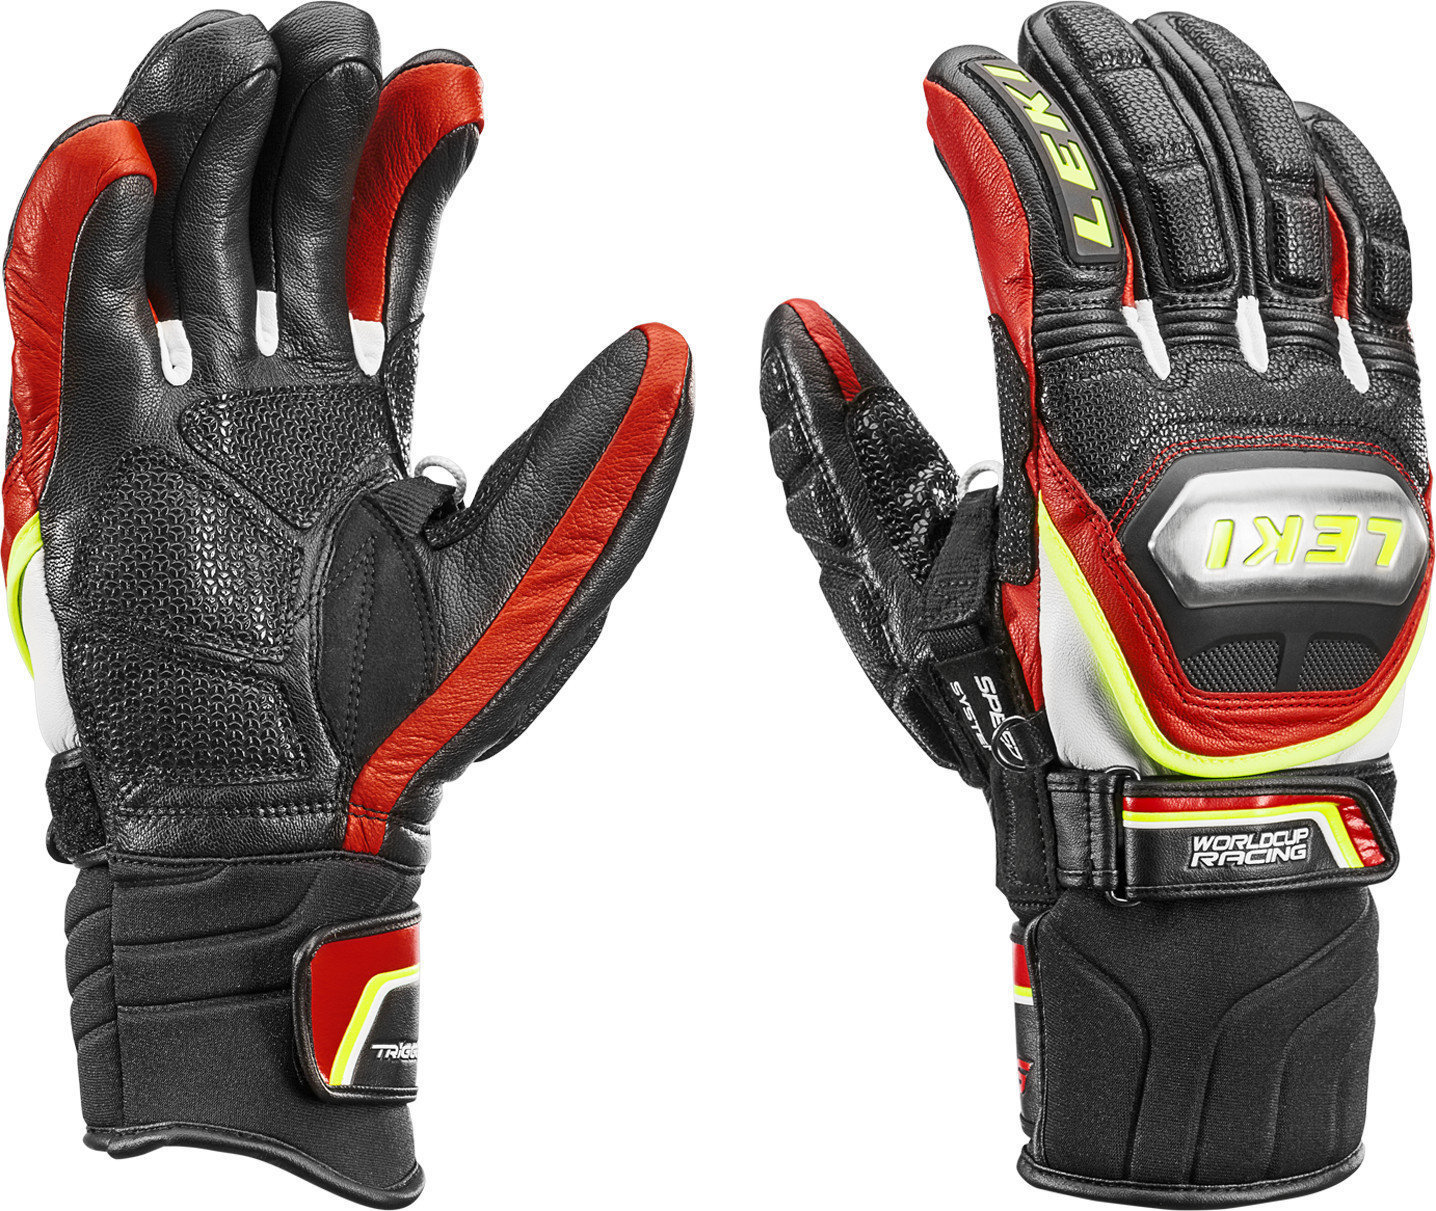 Ski Gloves Leki Worldcup Race TI S Speed System Black-Red-White-Yellow 9